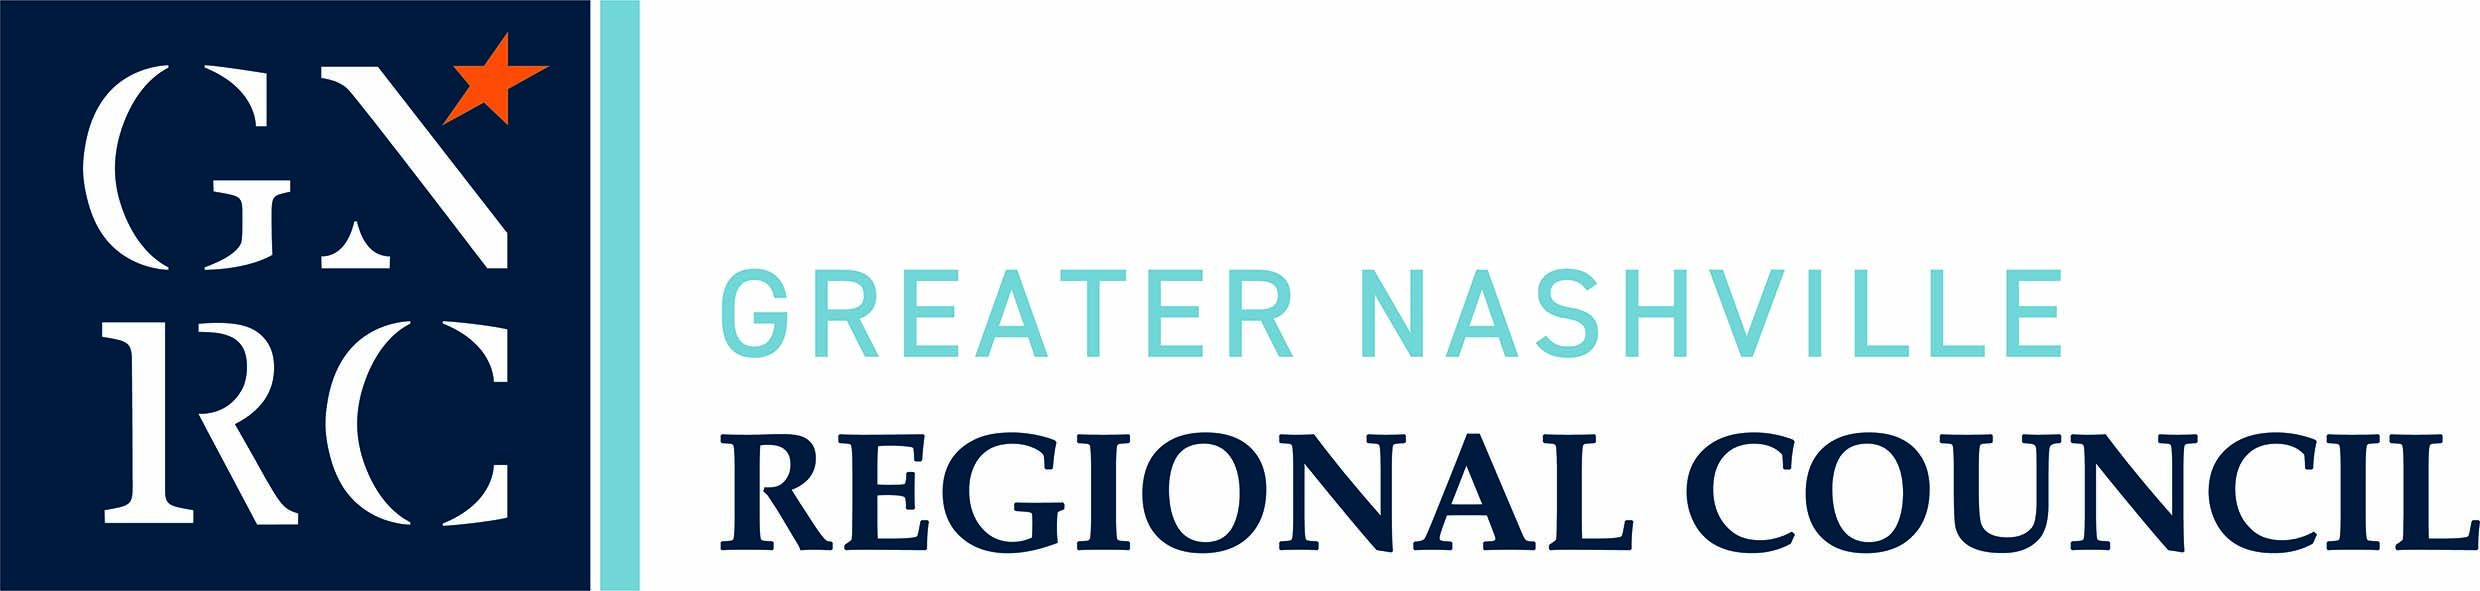 Greater Nashville Regional Council